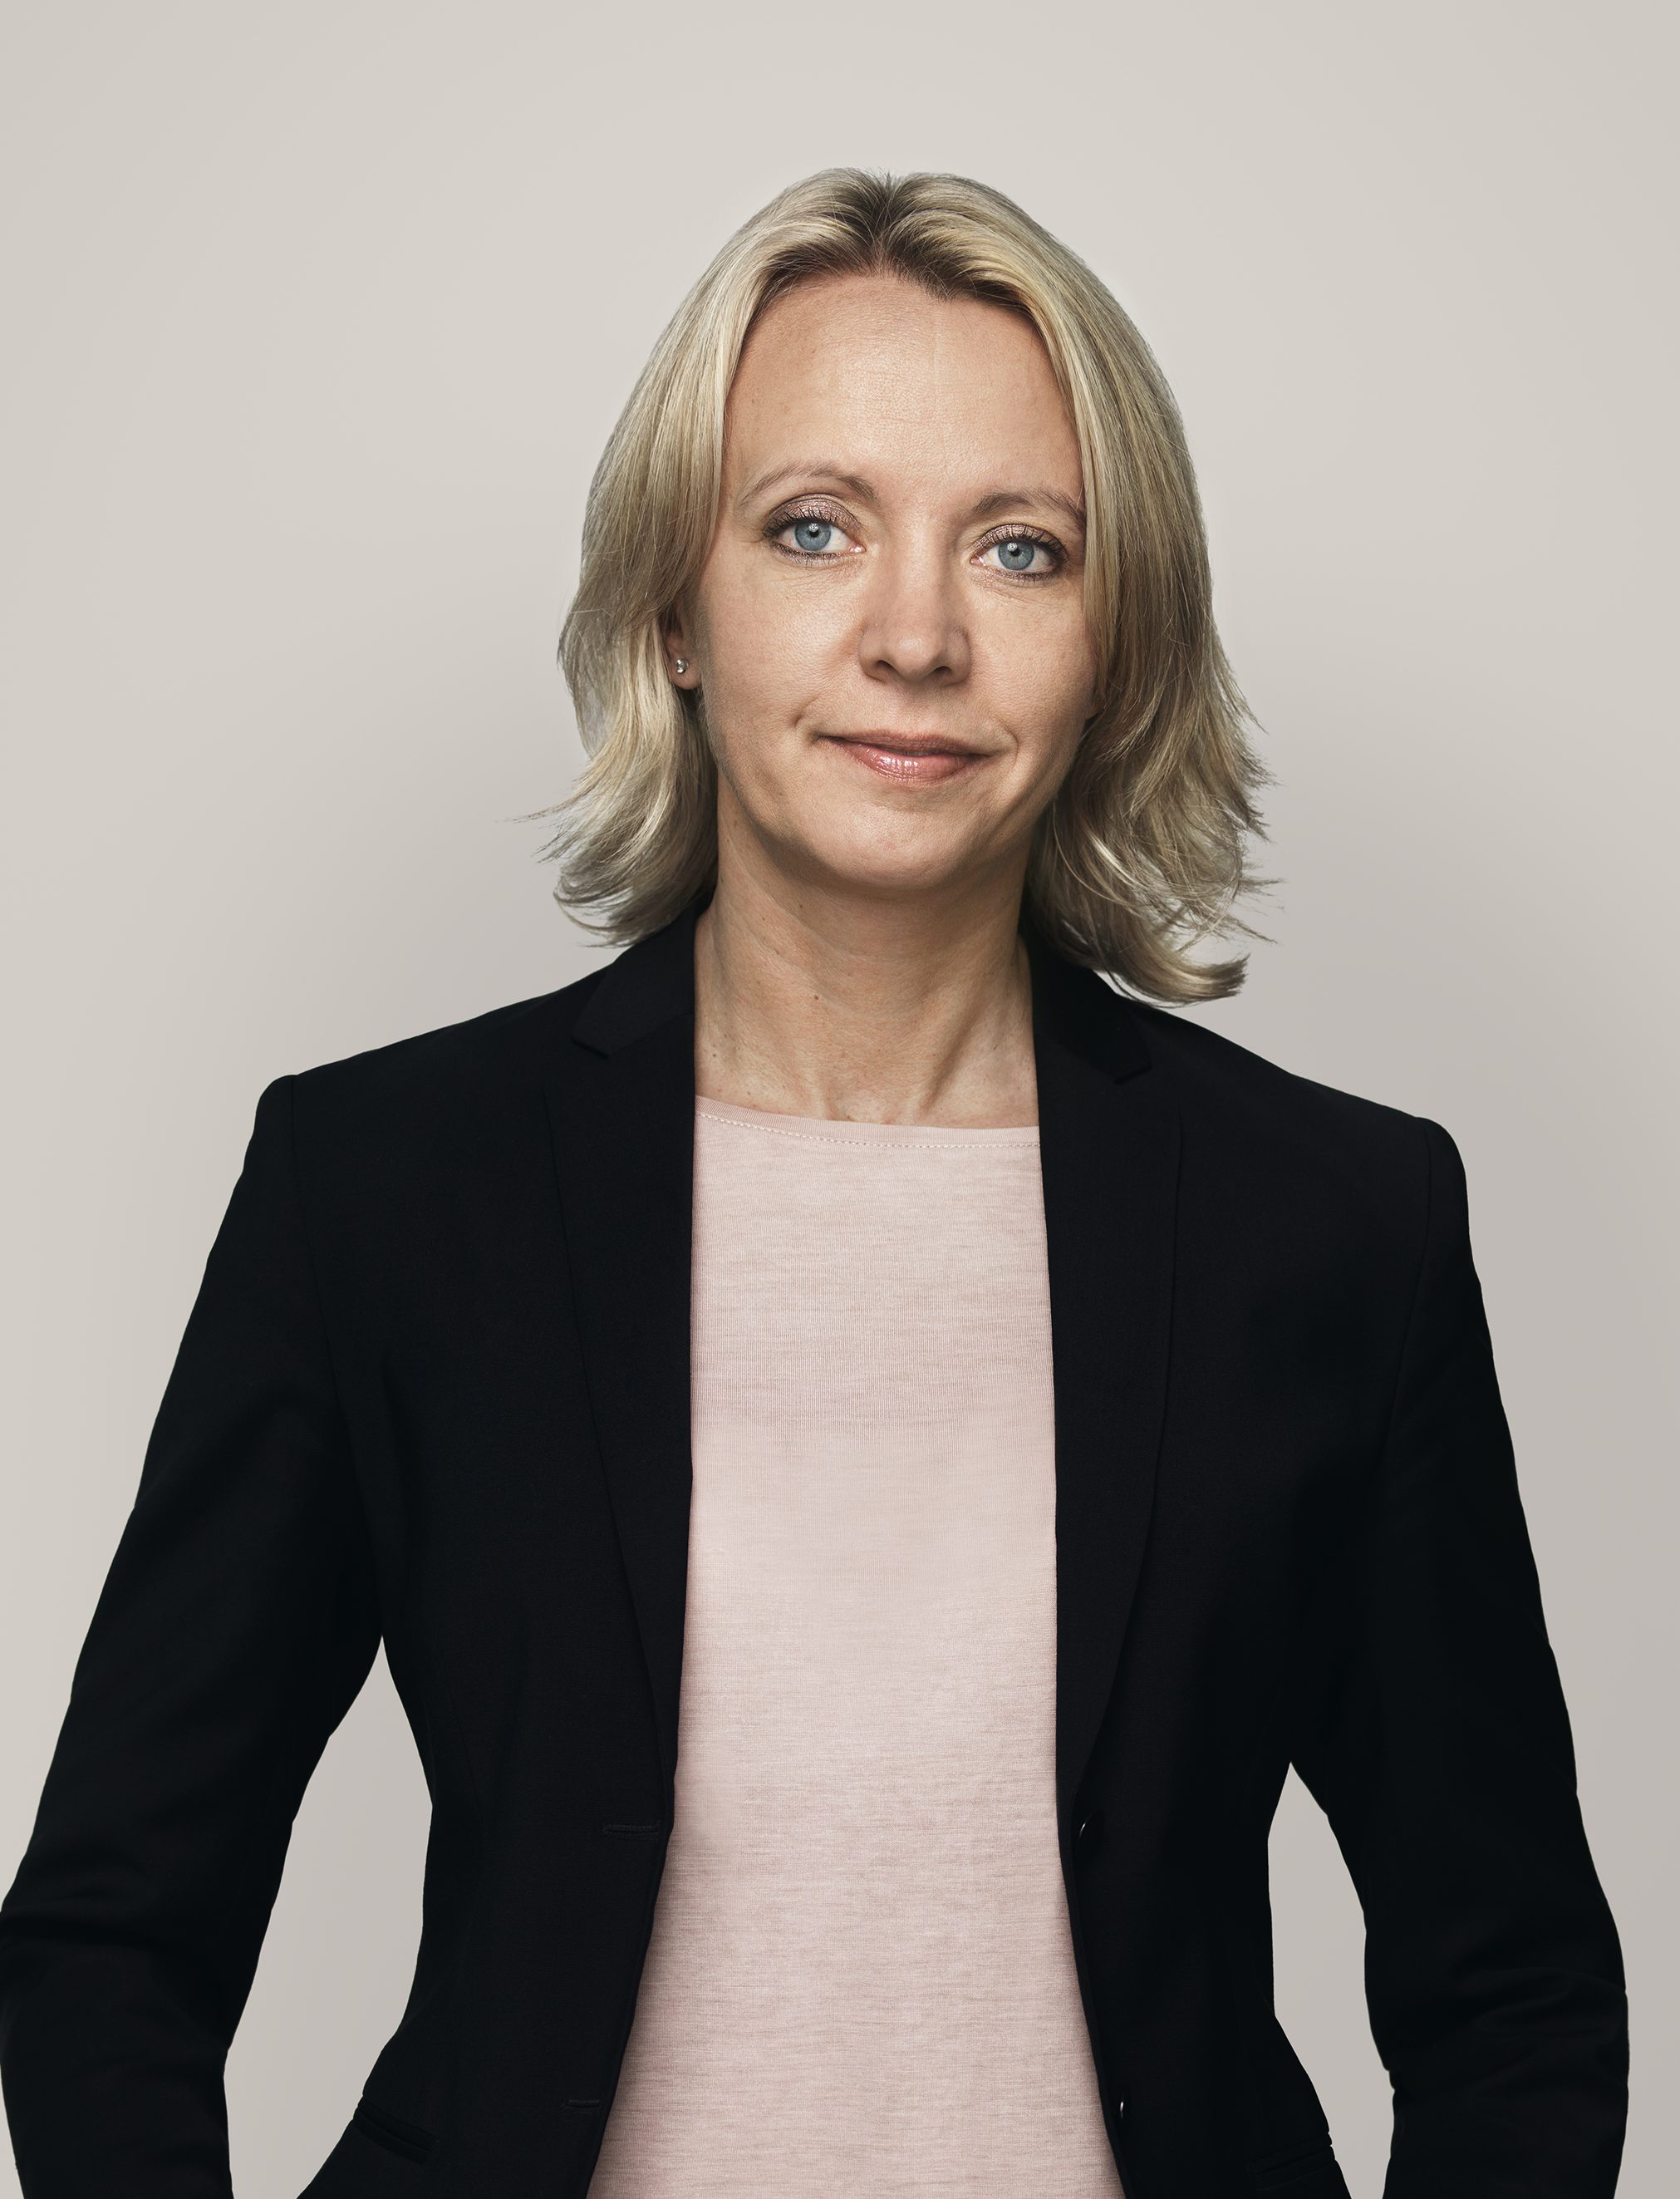 Karin Nyman, Acting Head of Media Relations Sweden